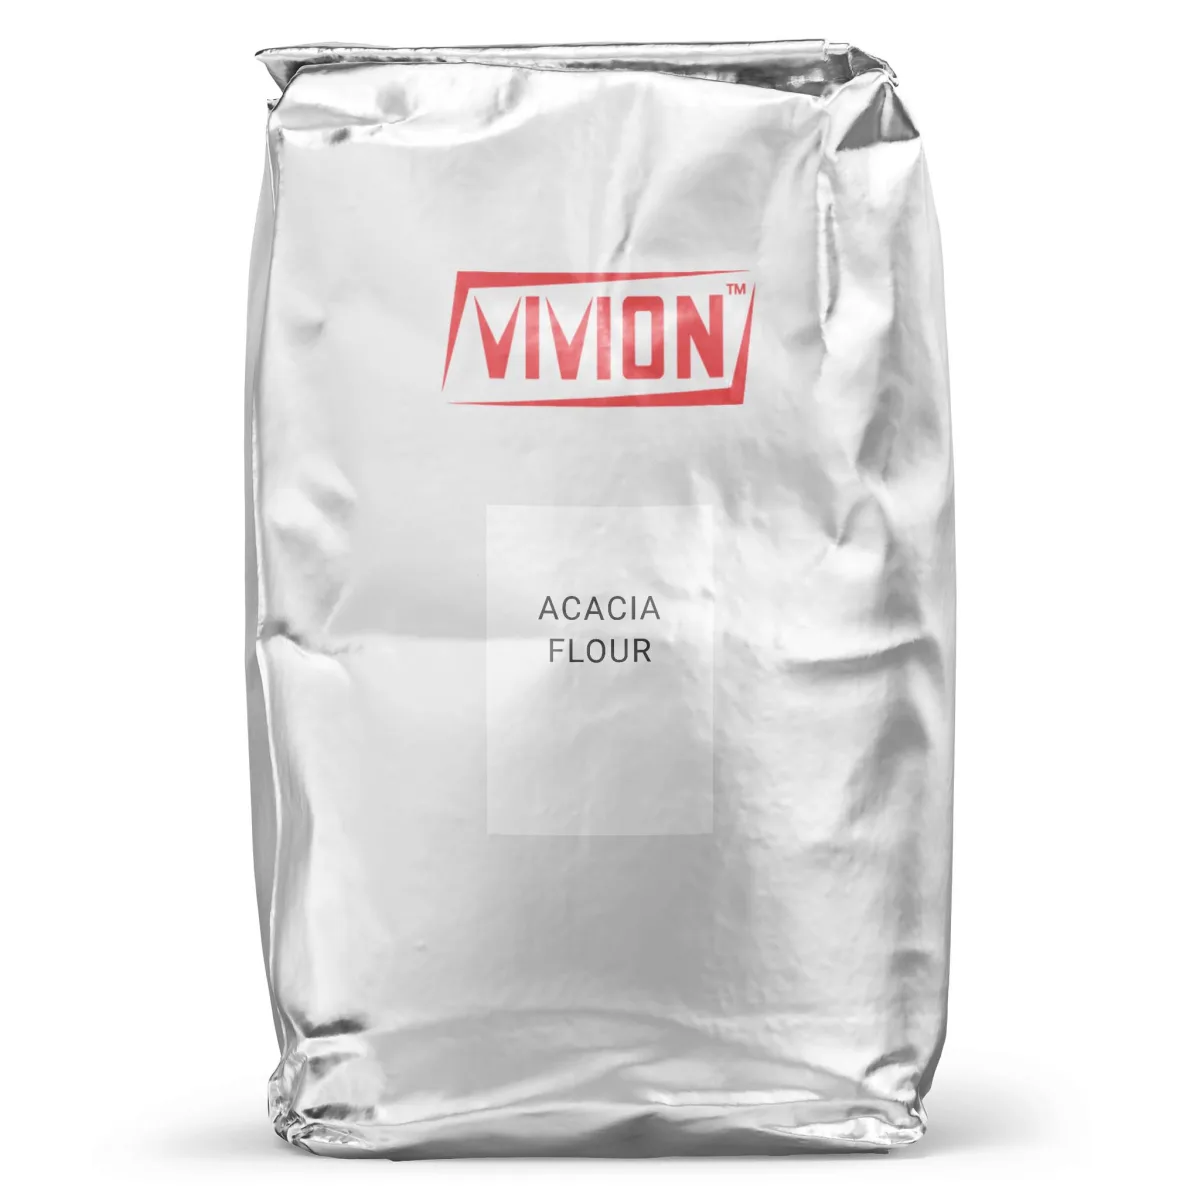 A bag of Vivion's wholesale Acacia Flour.